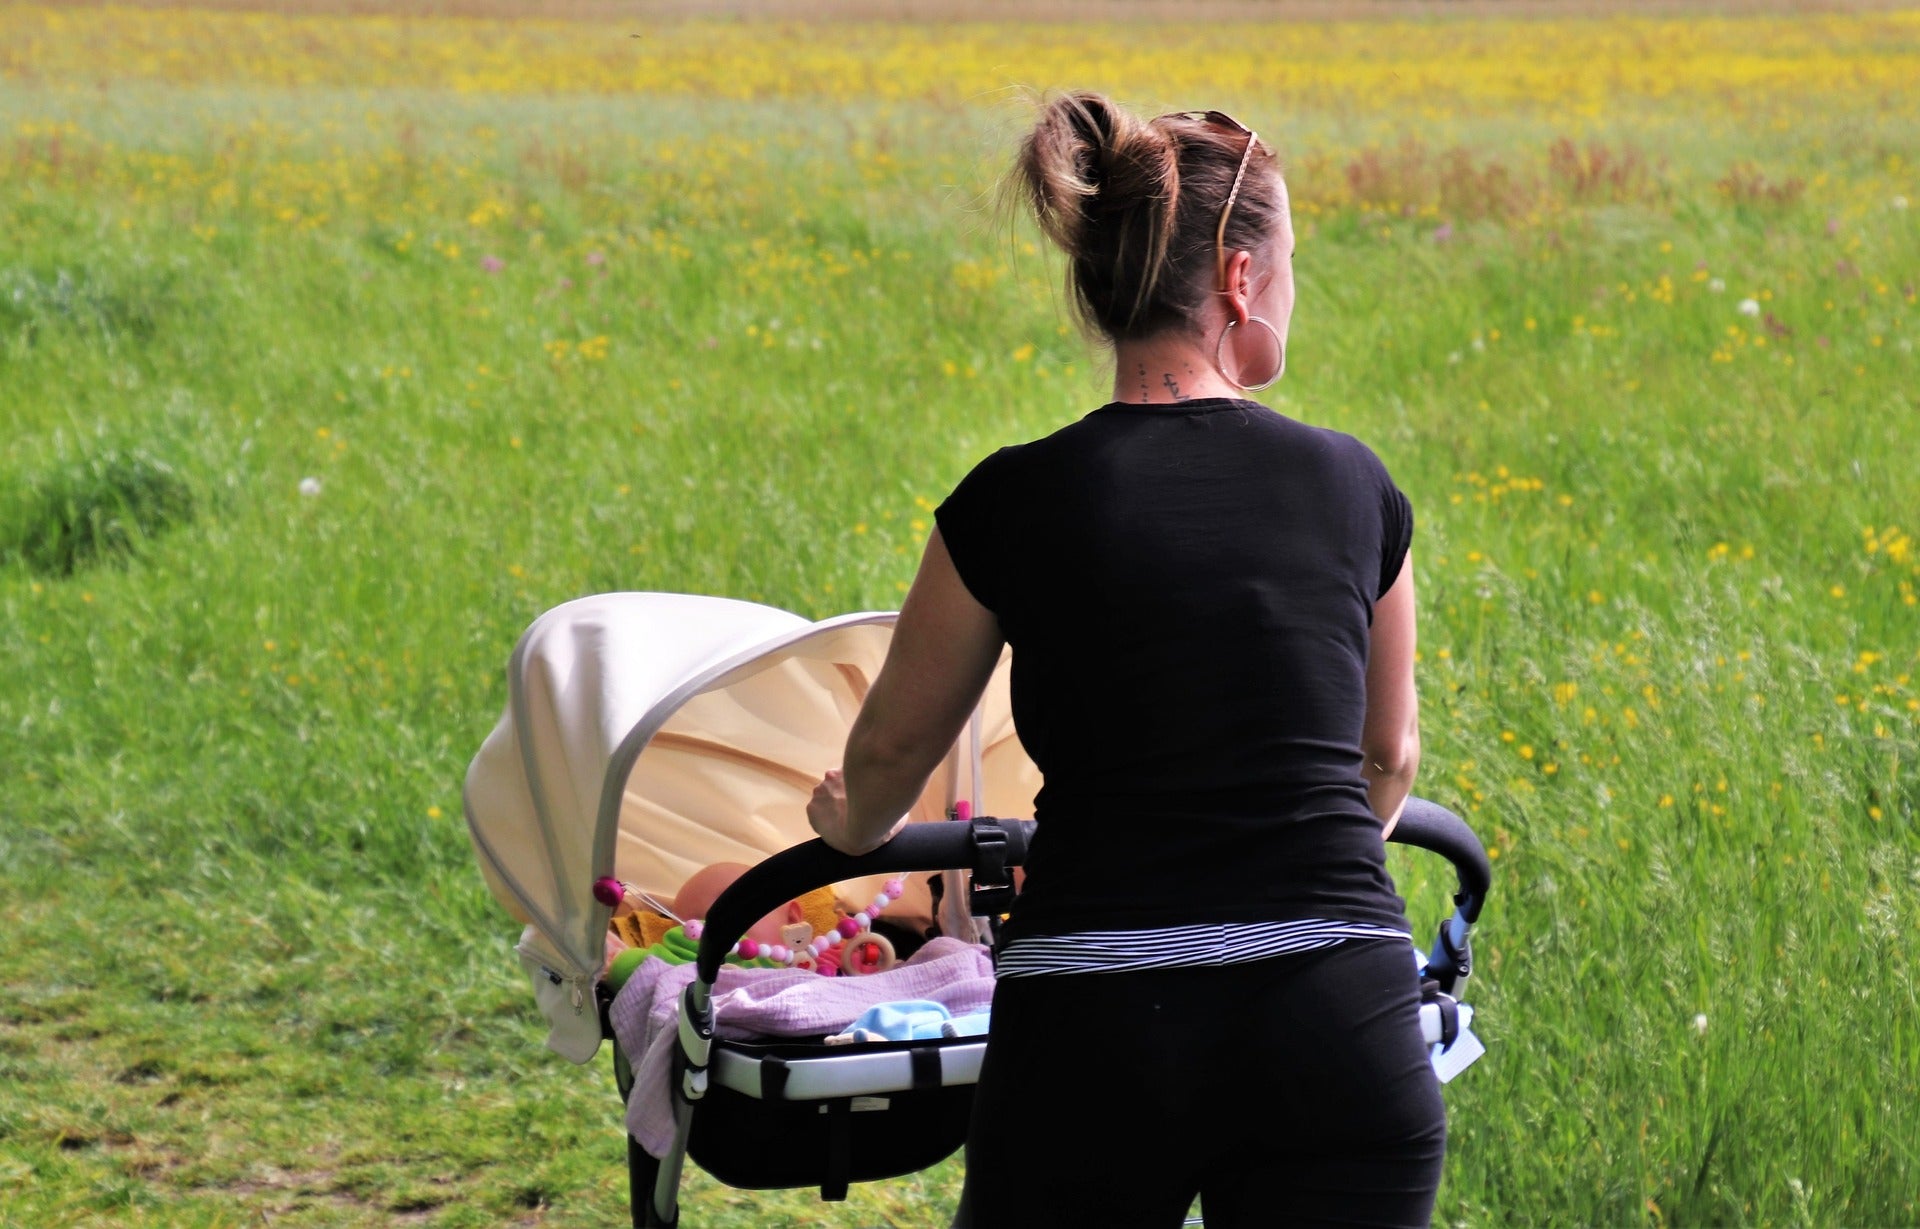 Women with a double stroller in a field 